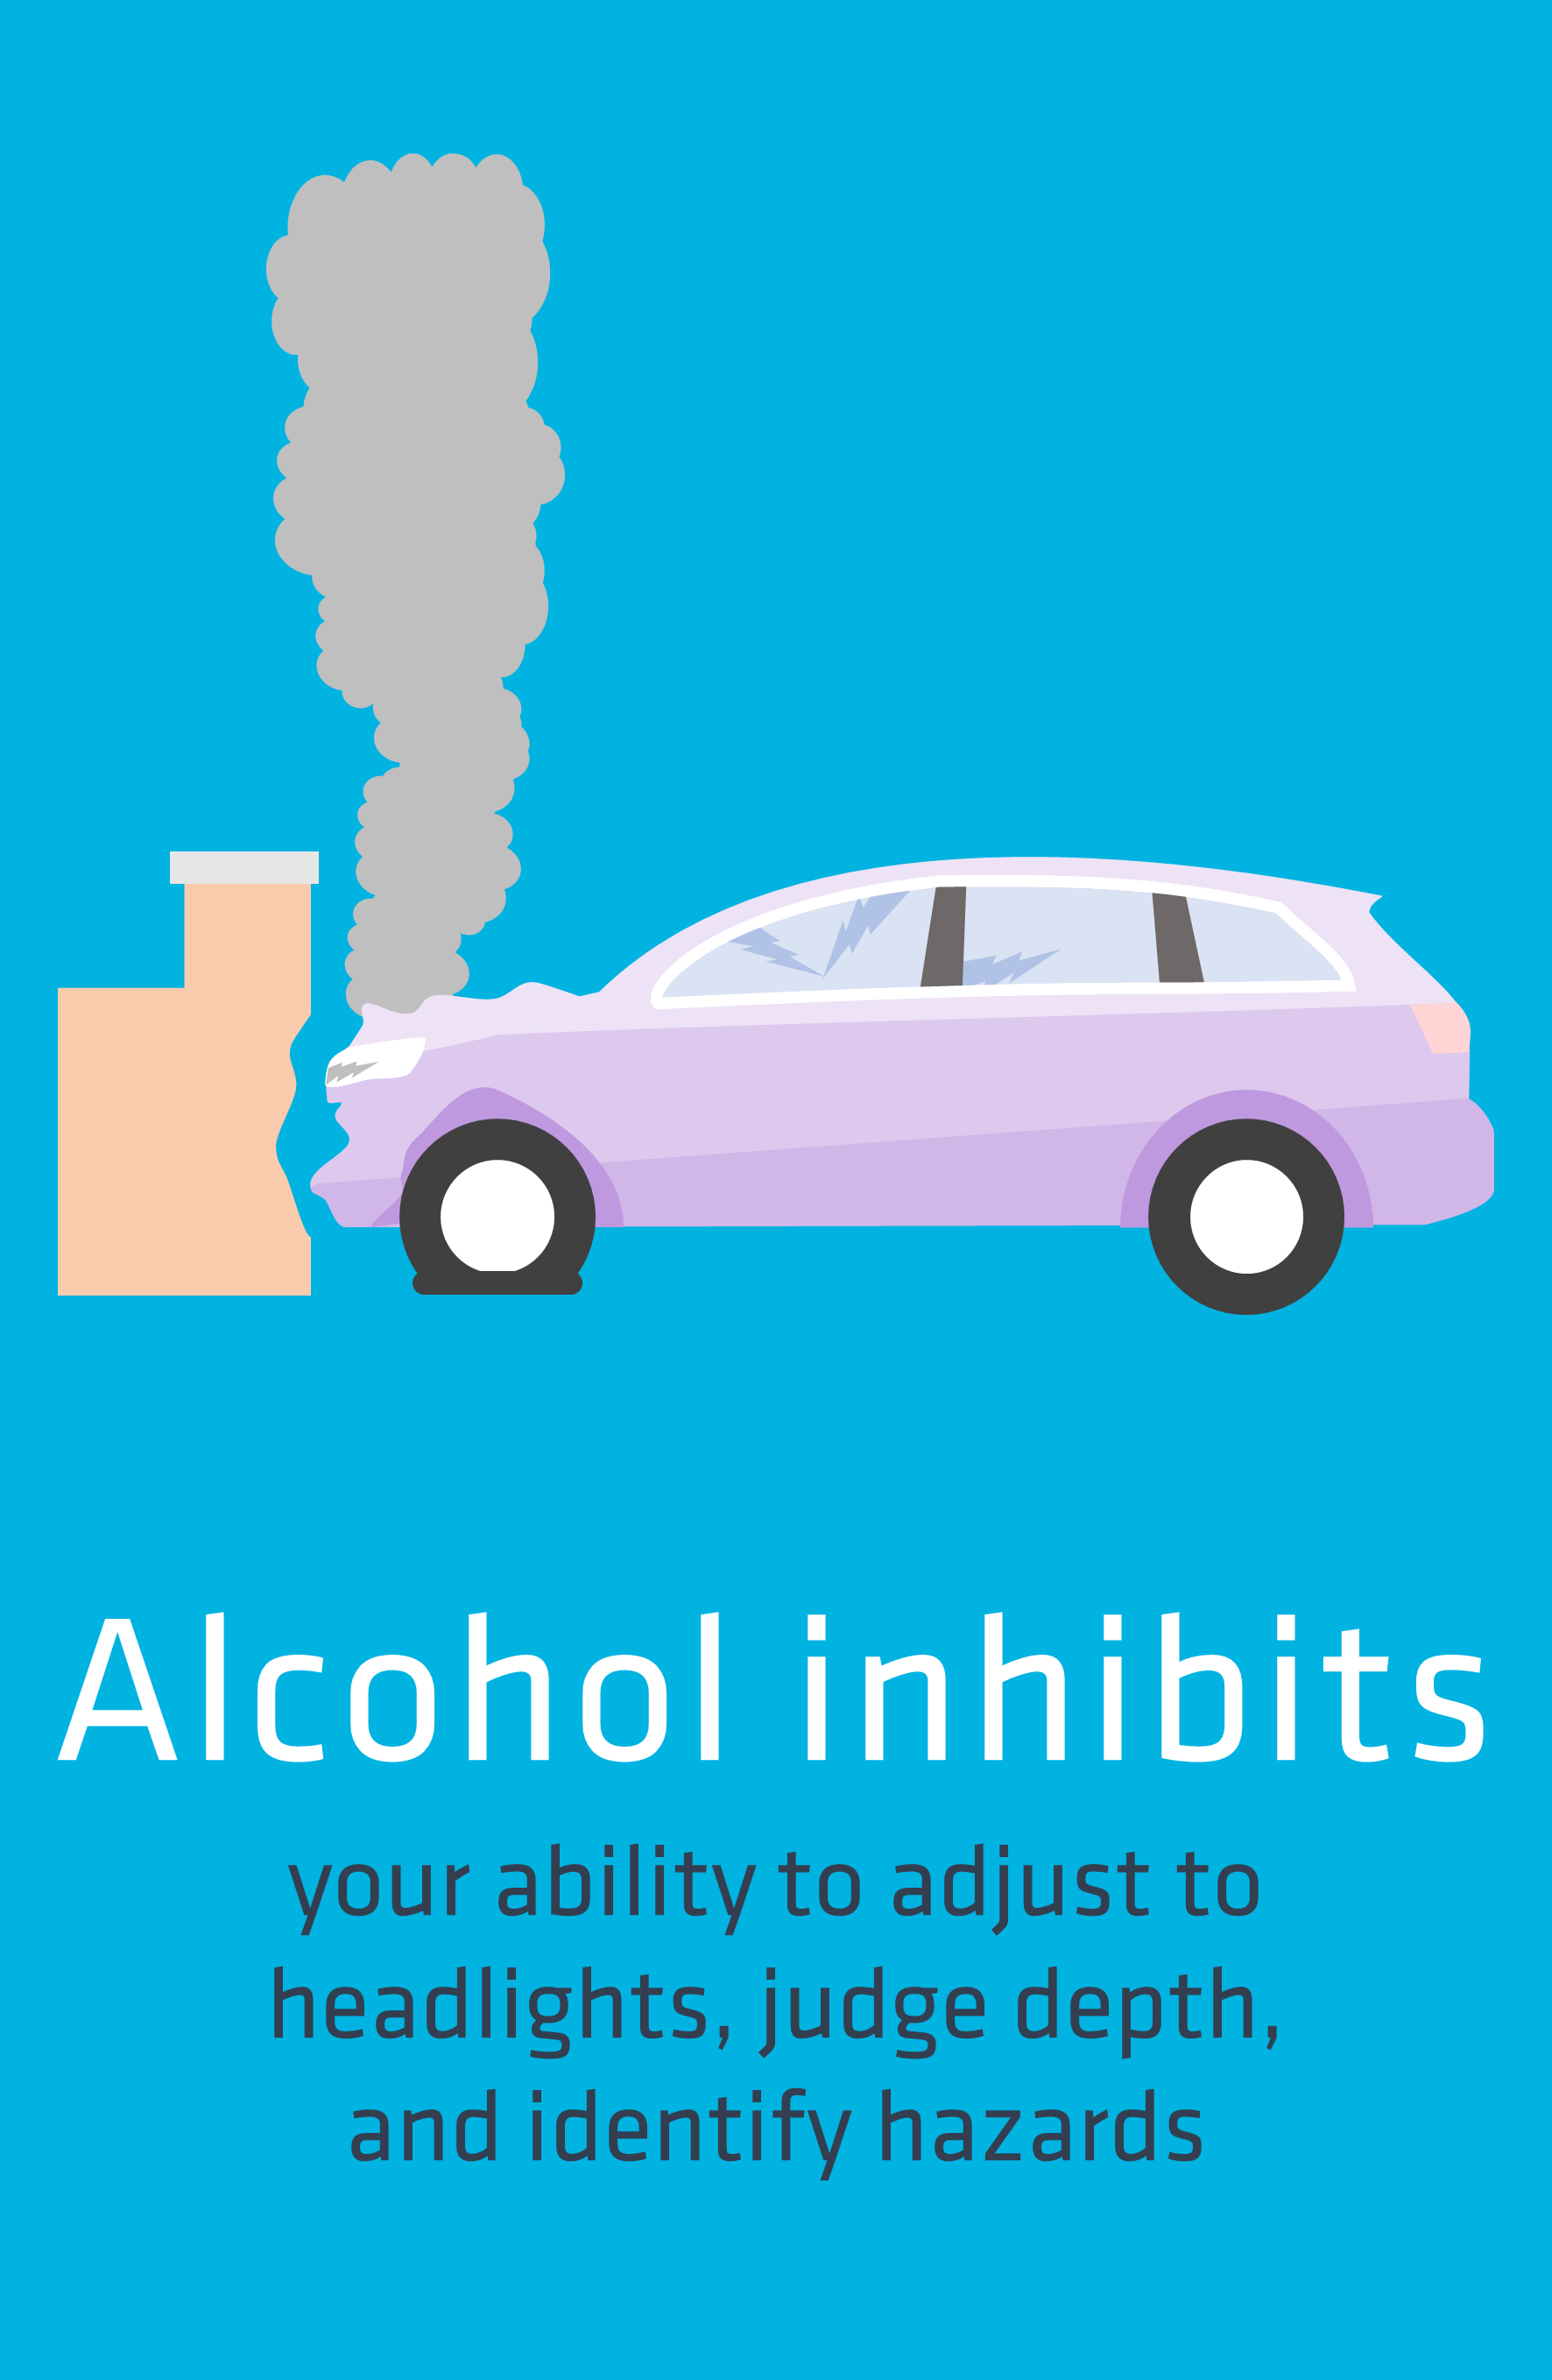 Alcohol inhibits